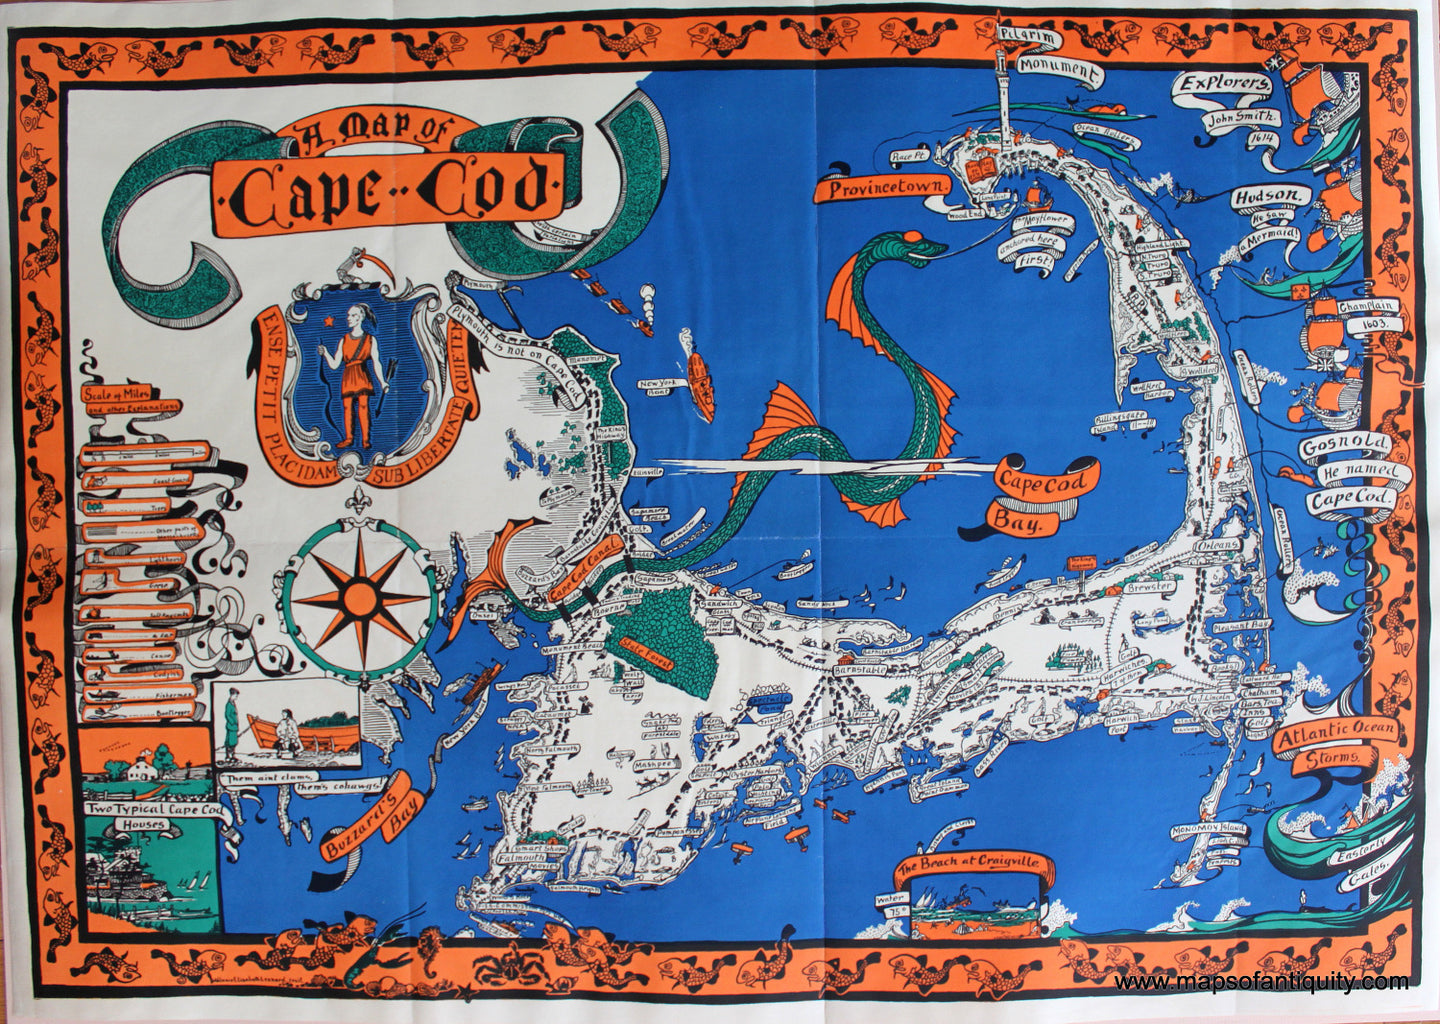 Antique-Printed-Color-Map-A-Map-of-Cape-Cod-******-United-States-Massachusetts-1926-Melanie-Elisabeth-Leonard-Maps-Of-Antiquity